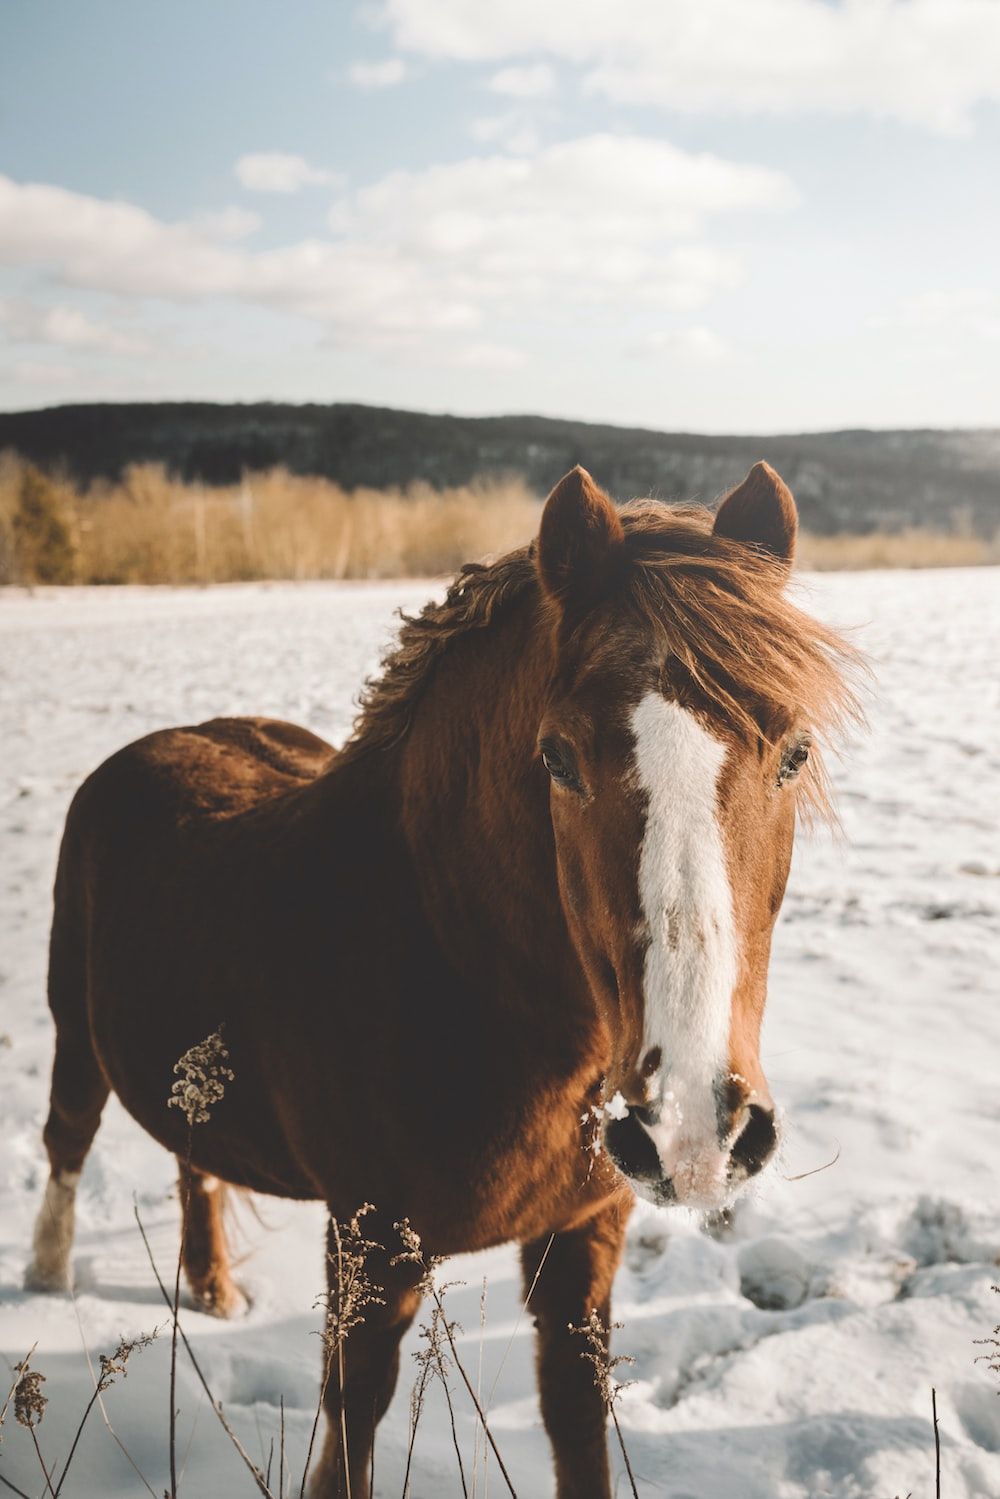  Pferde Im Schnee Hintergrundbild 1000x1499. Foto zum Thema 낮 동안 눈 위에 서 있는 갈색과 흰색 말